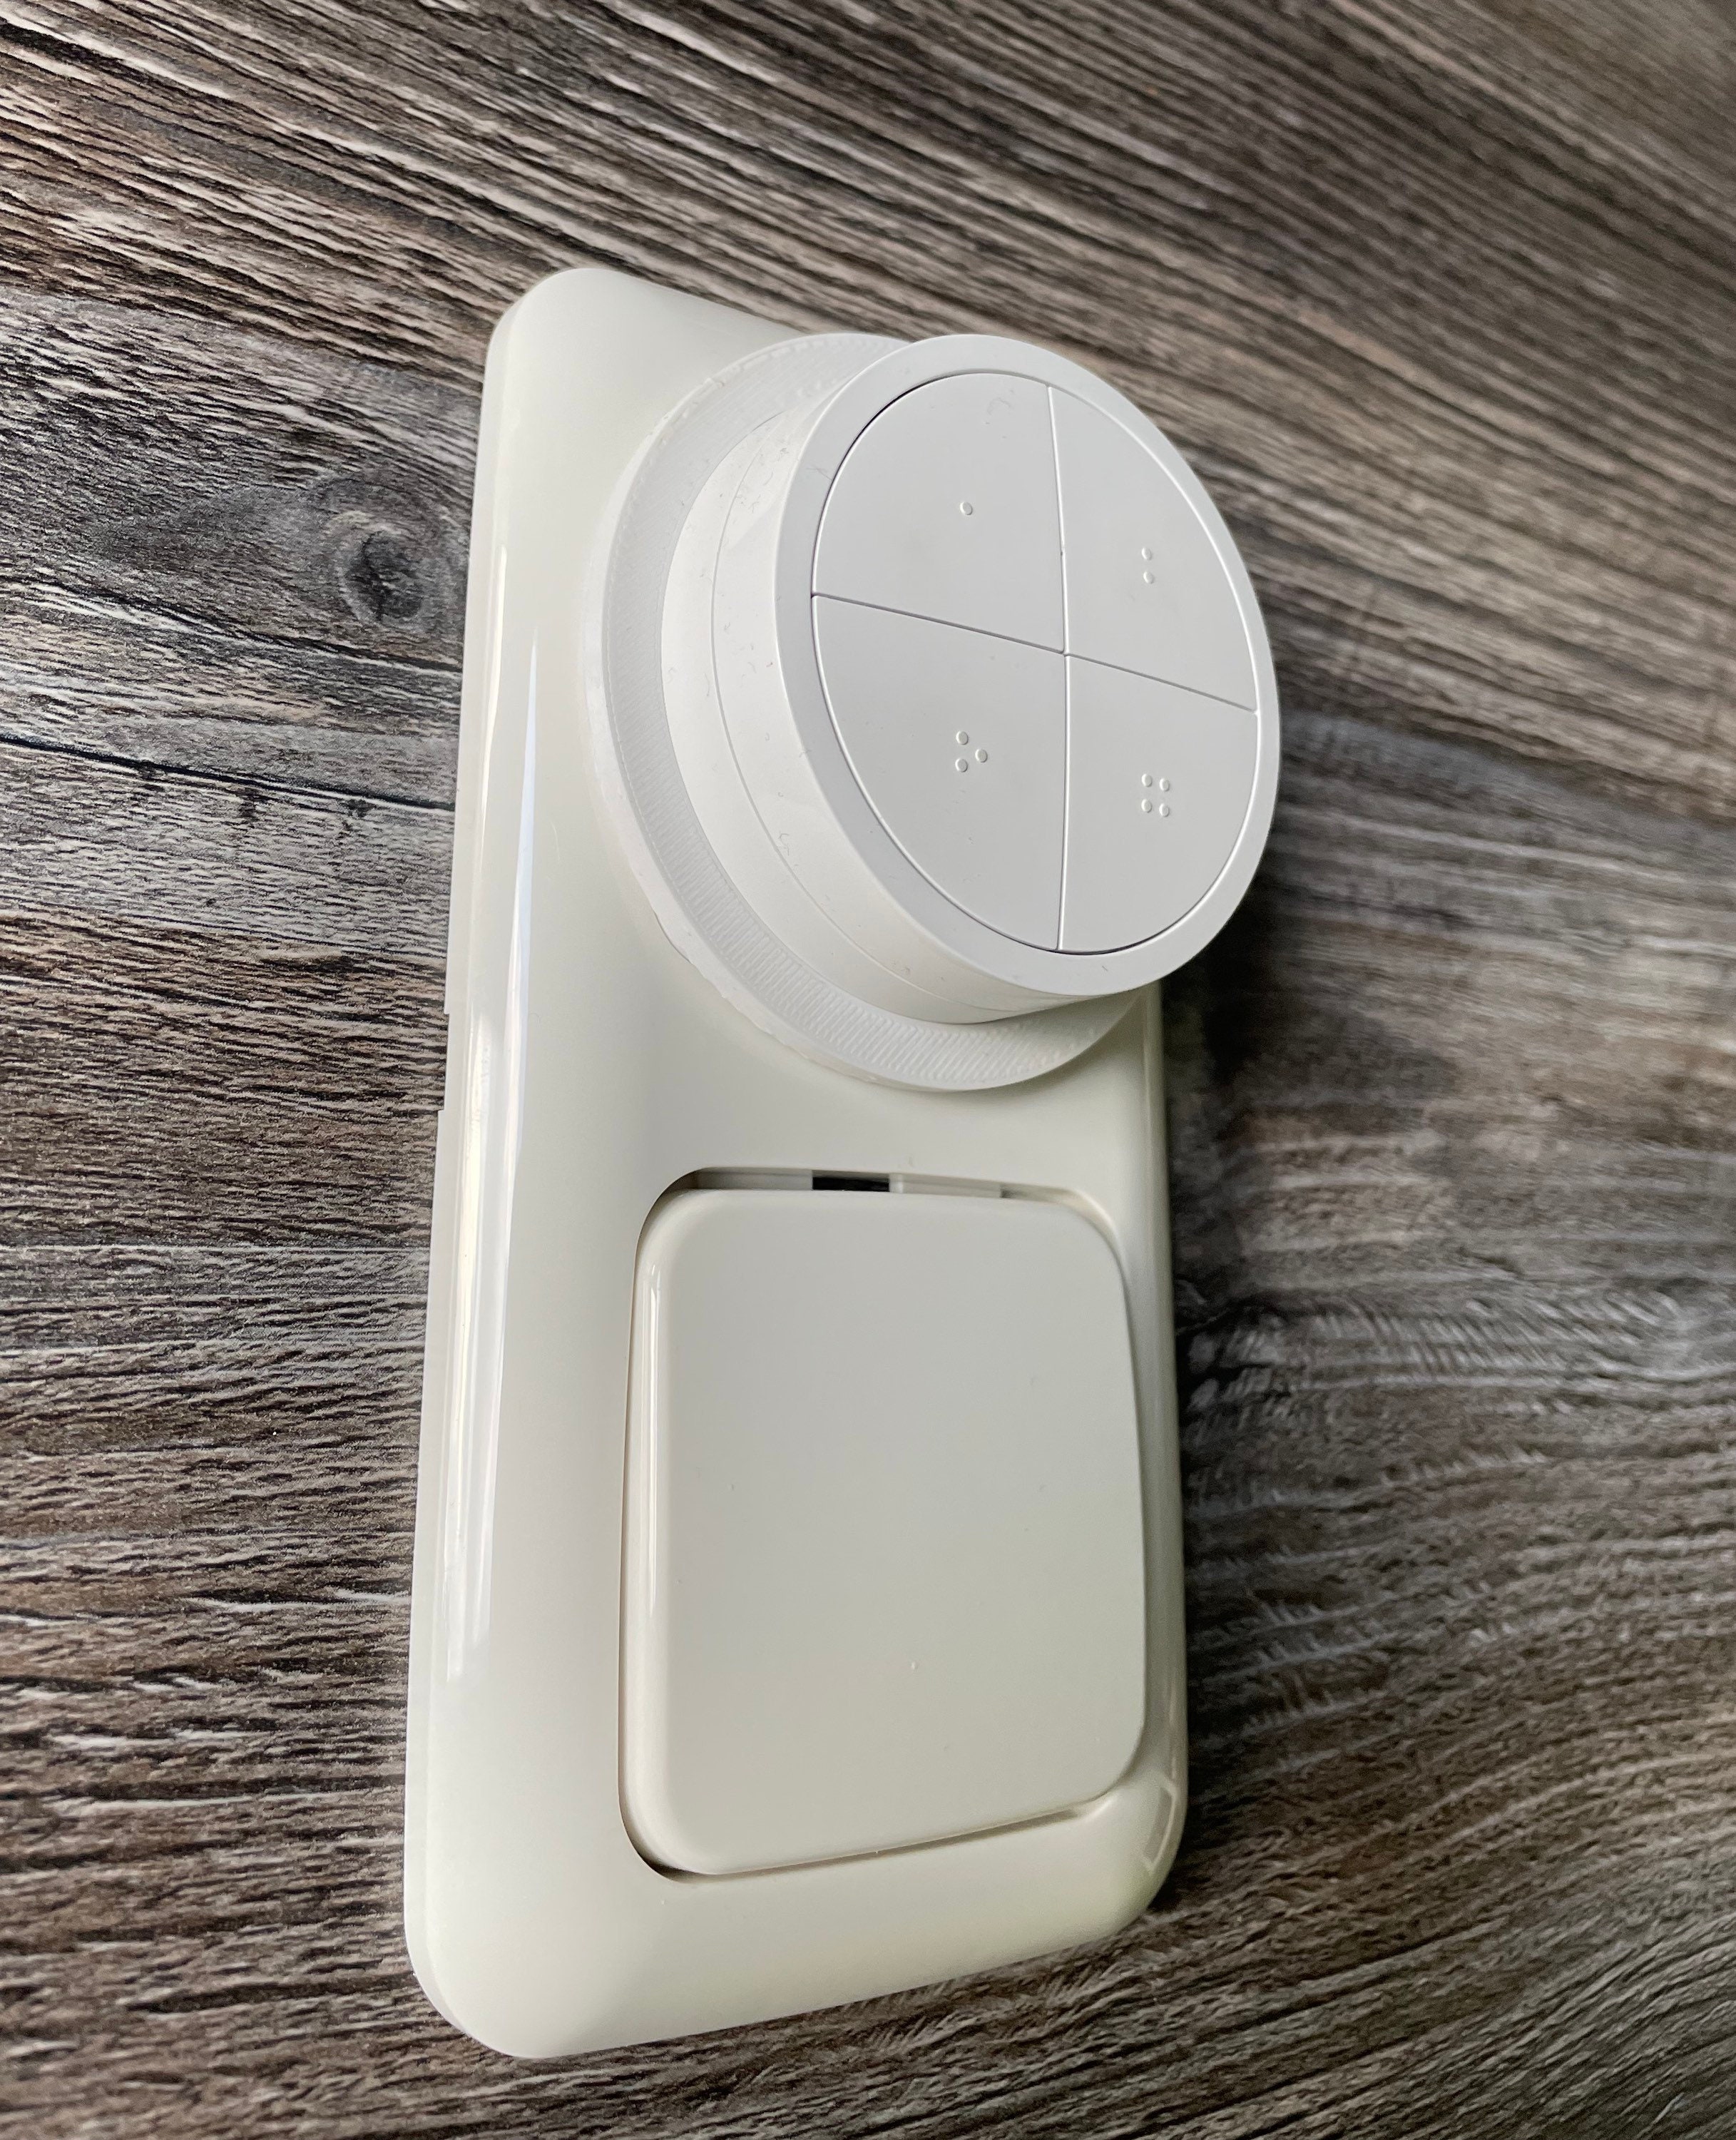 Philips Hue Tap Dial Switch - Interrupteur Rotatif - Blanc